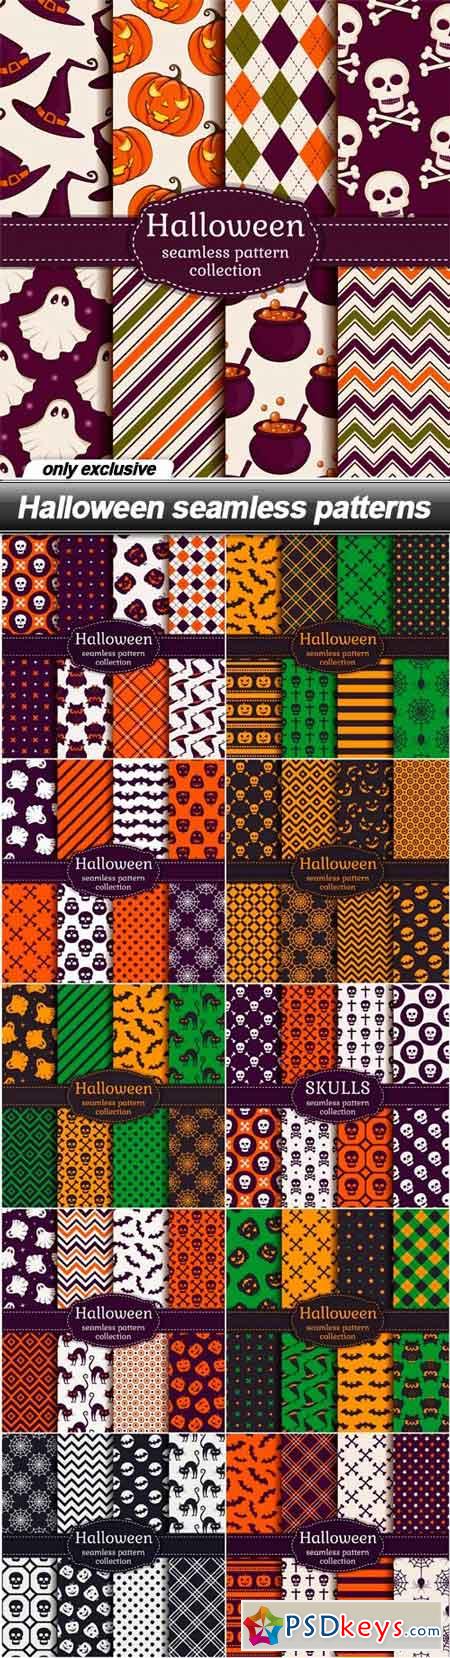 Halloween seamless patterns - 11 EPS